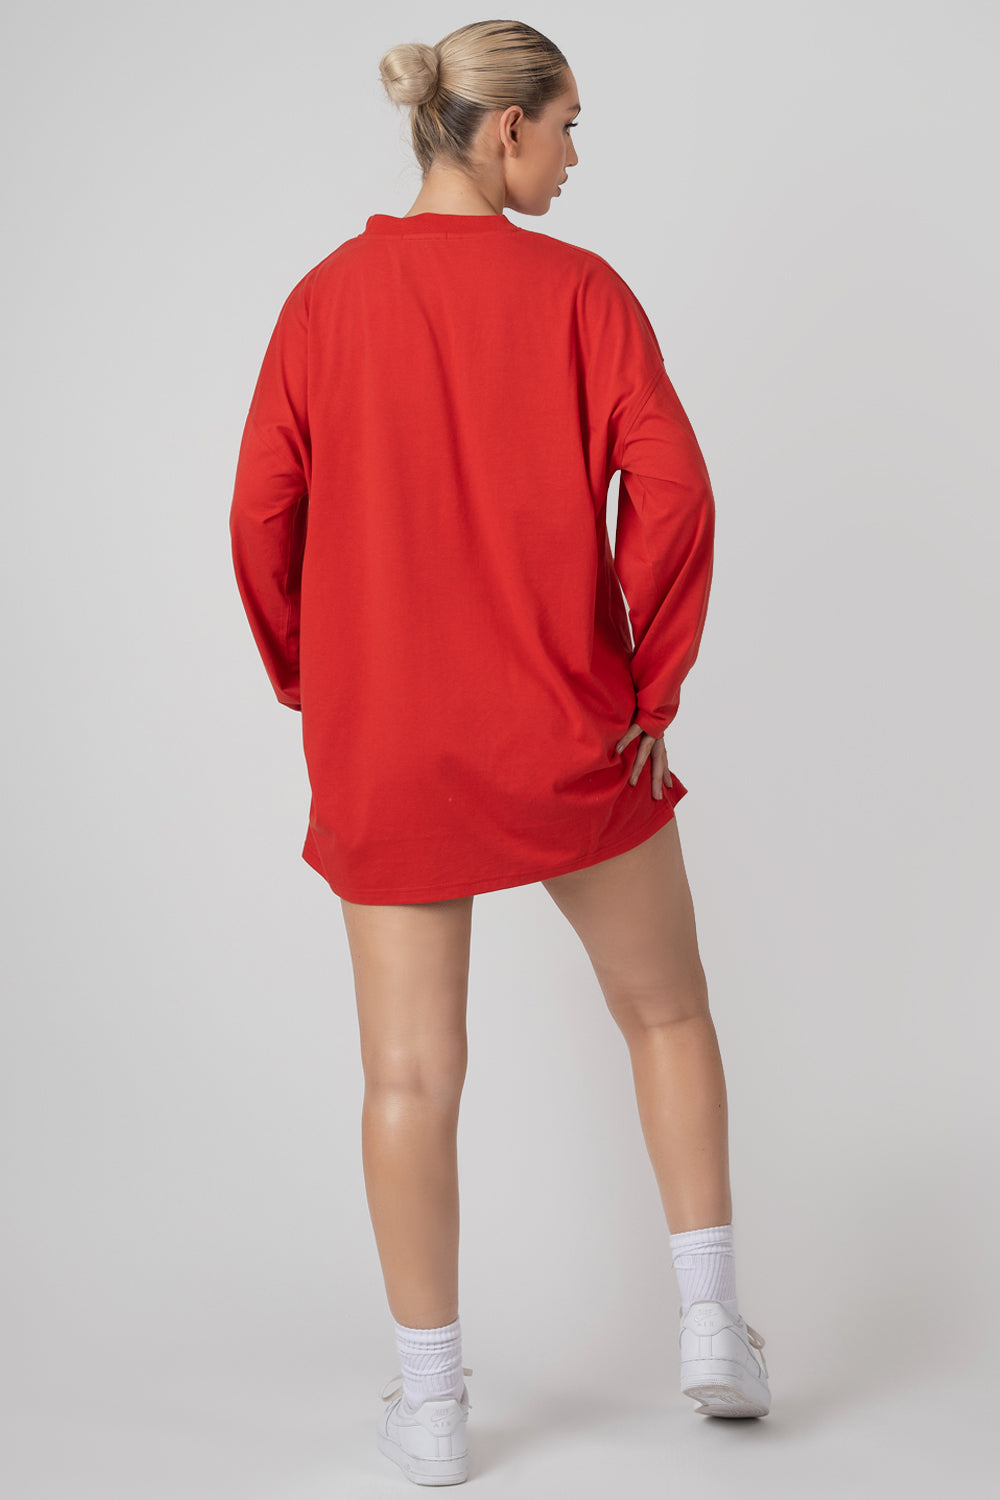 COLUMBIA SLOGAN LONG SLEEVED T-SHIRT DRESS RED